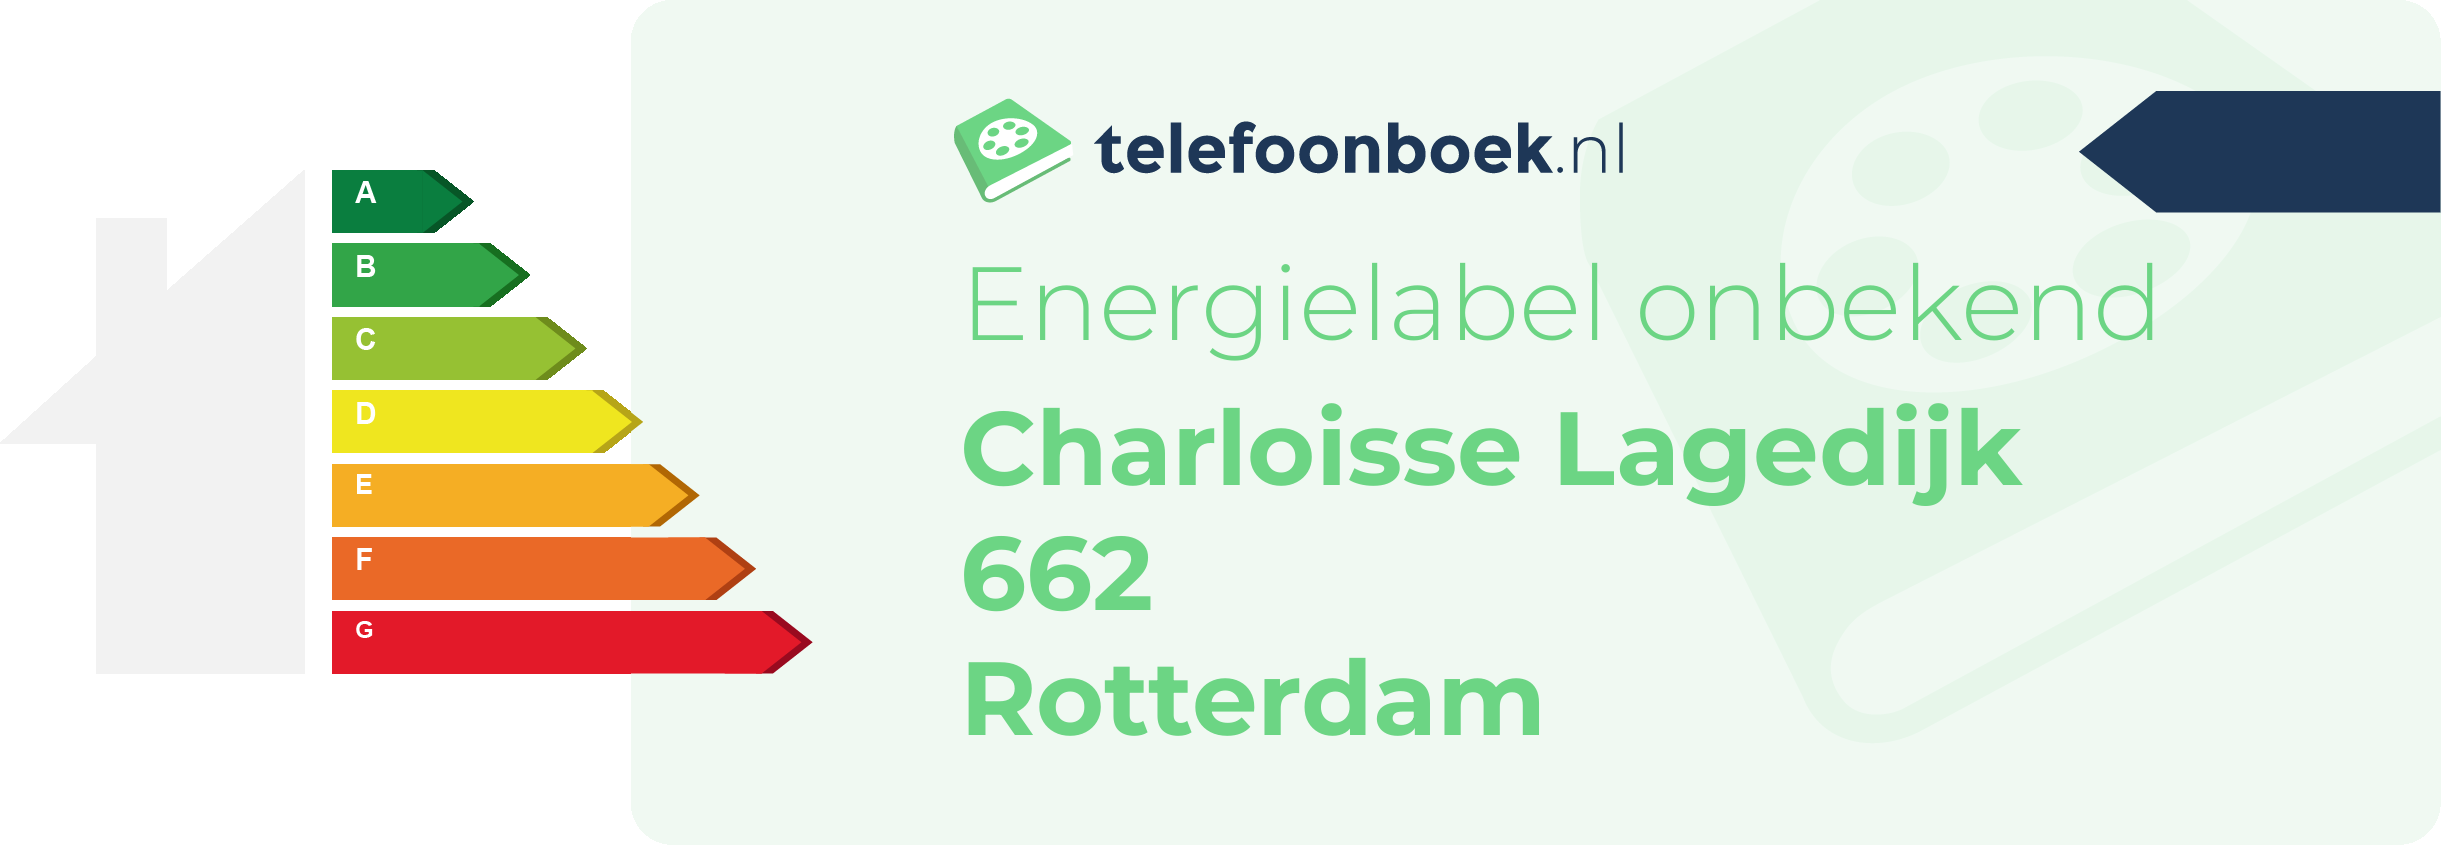 Energielabel Charloisse Lagedijk 662 Rotterdam